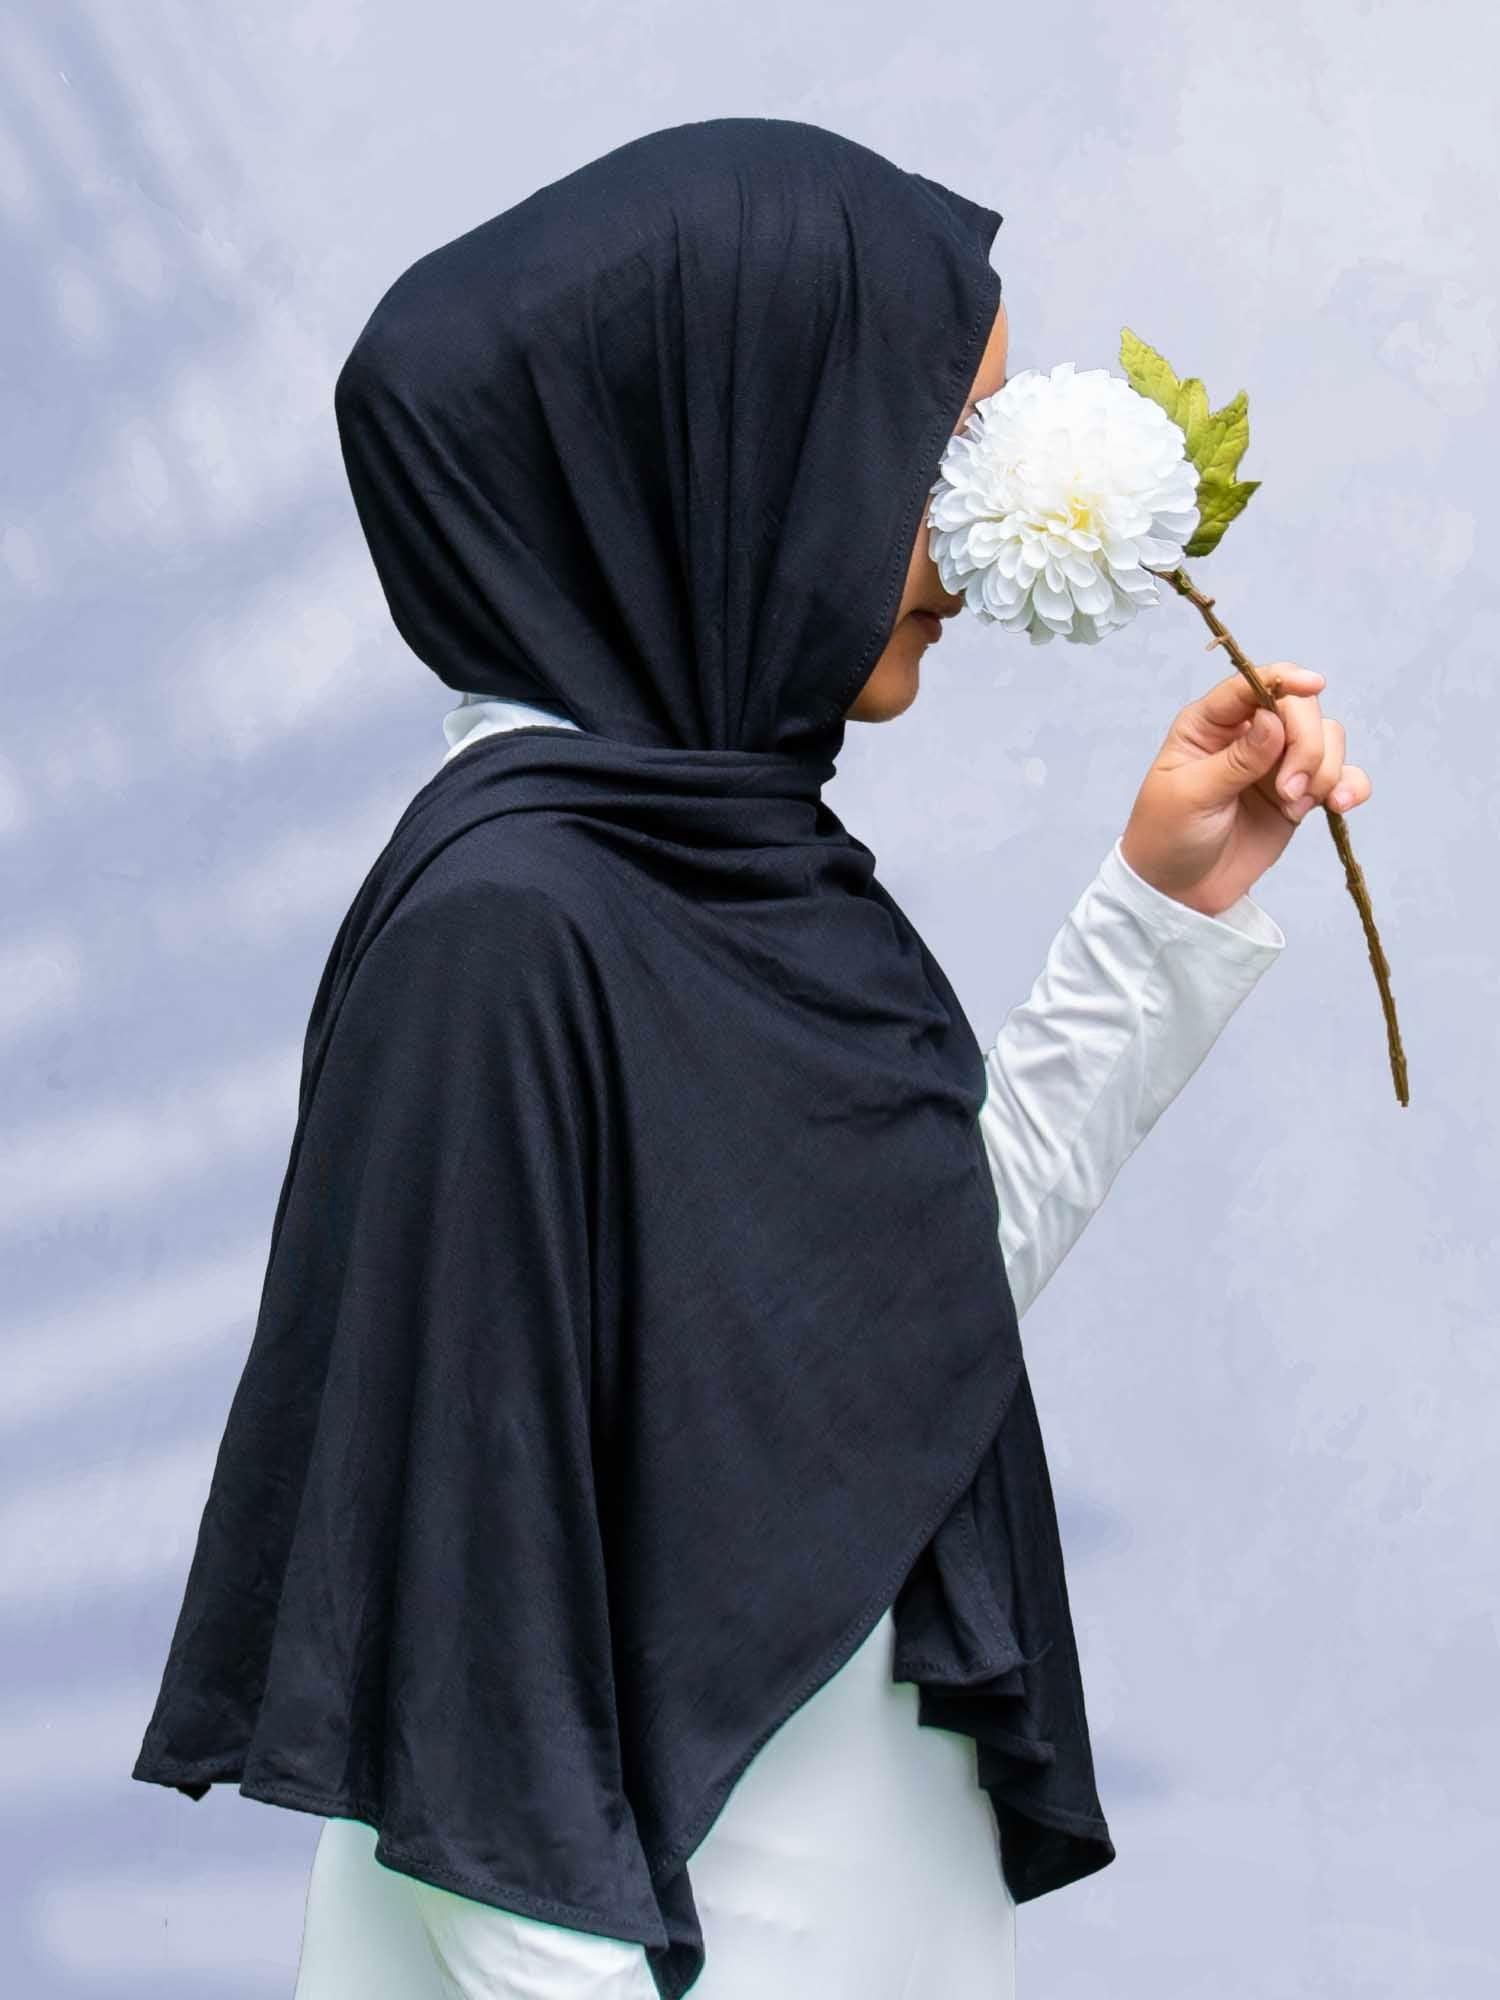 SoftTouch Perfect Fit Hijab in Black Pearl - BubbleGirl